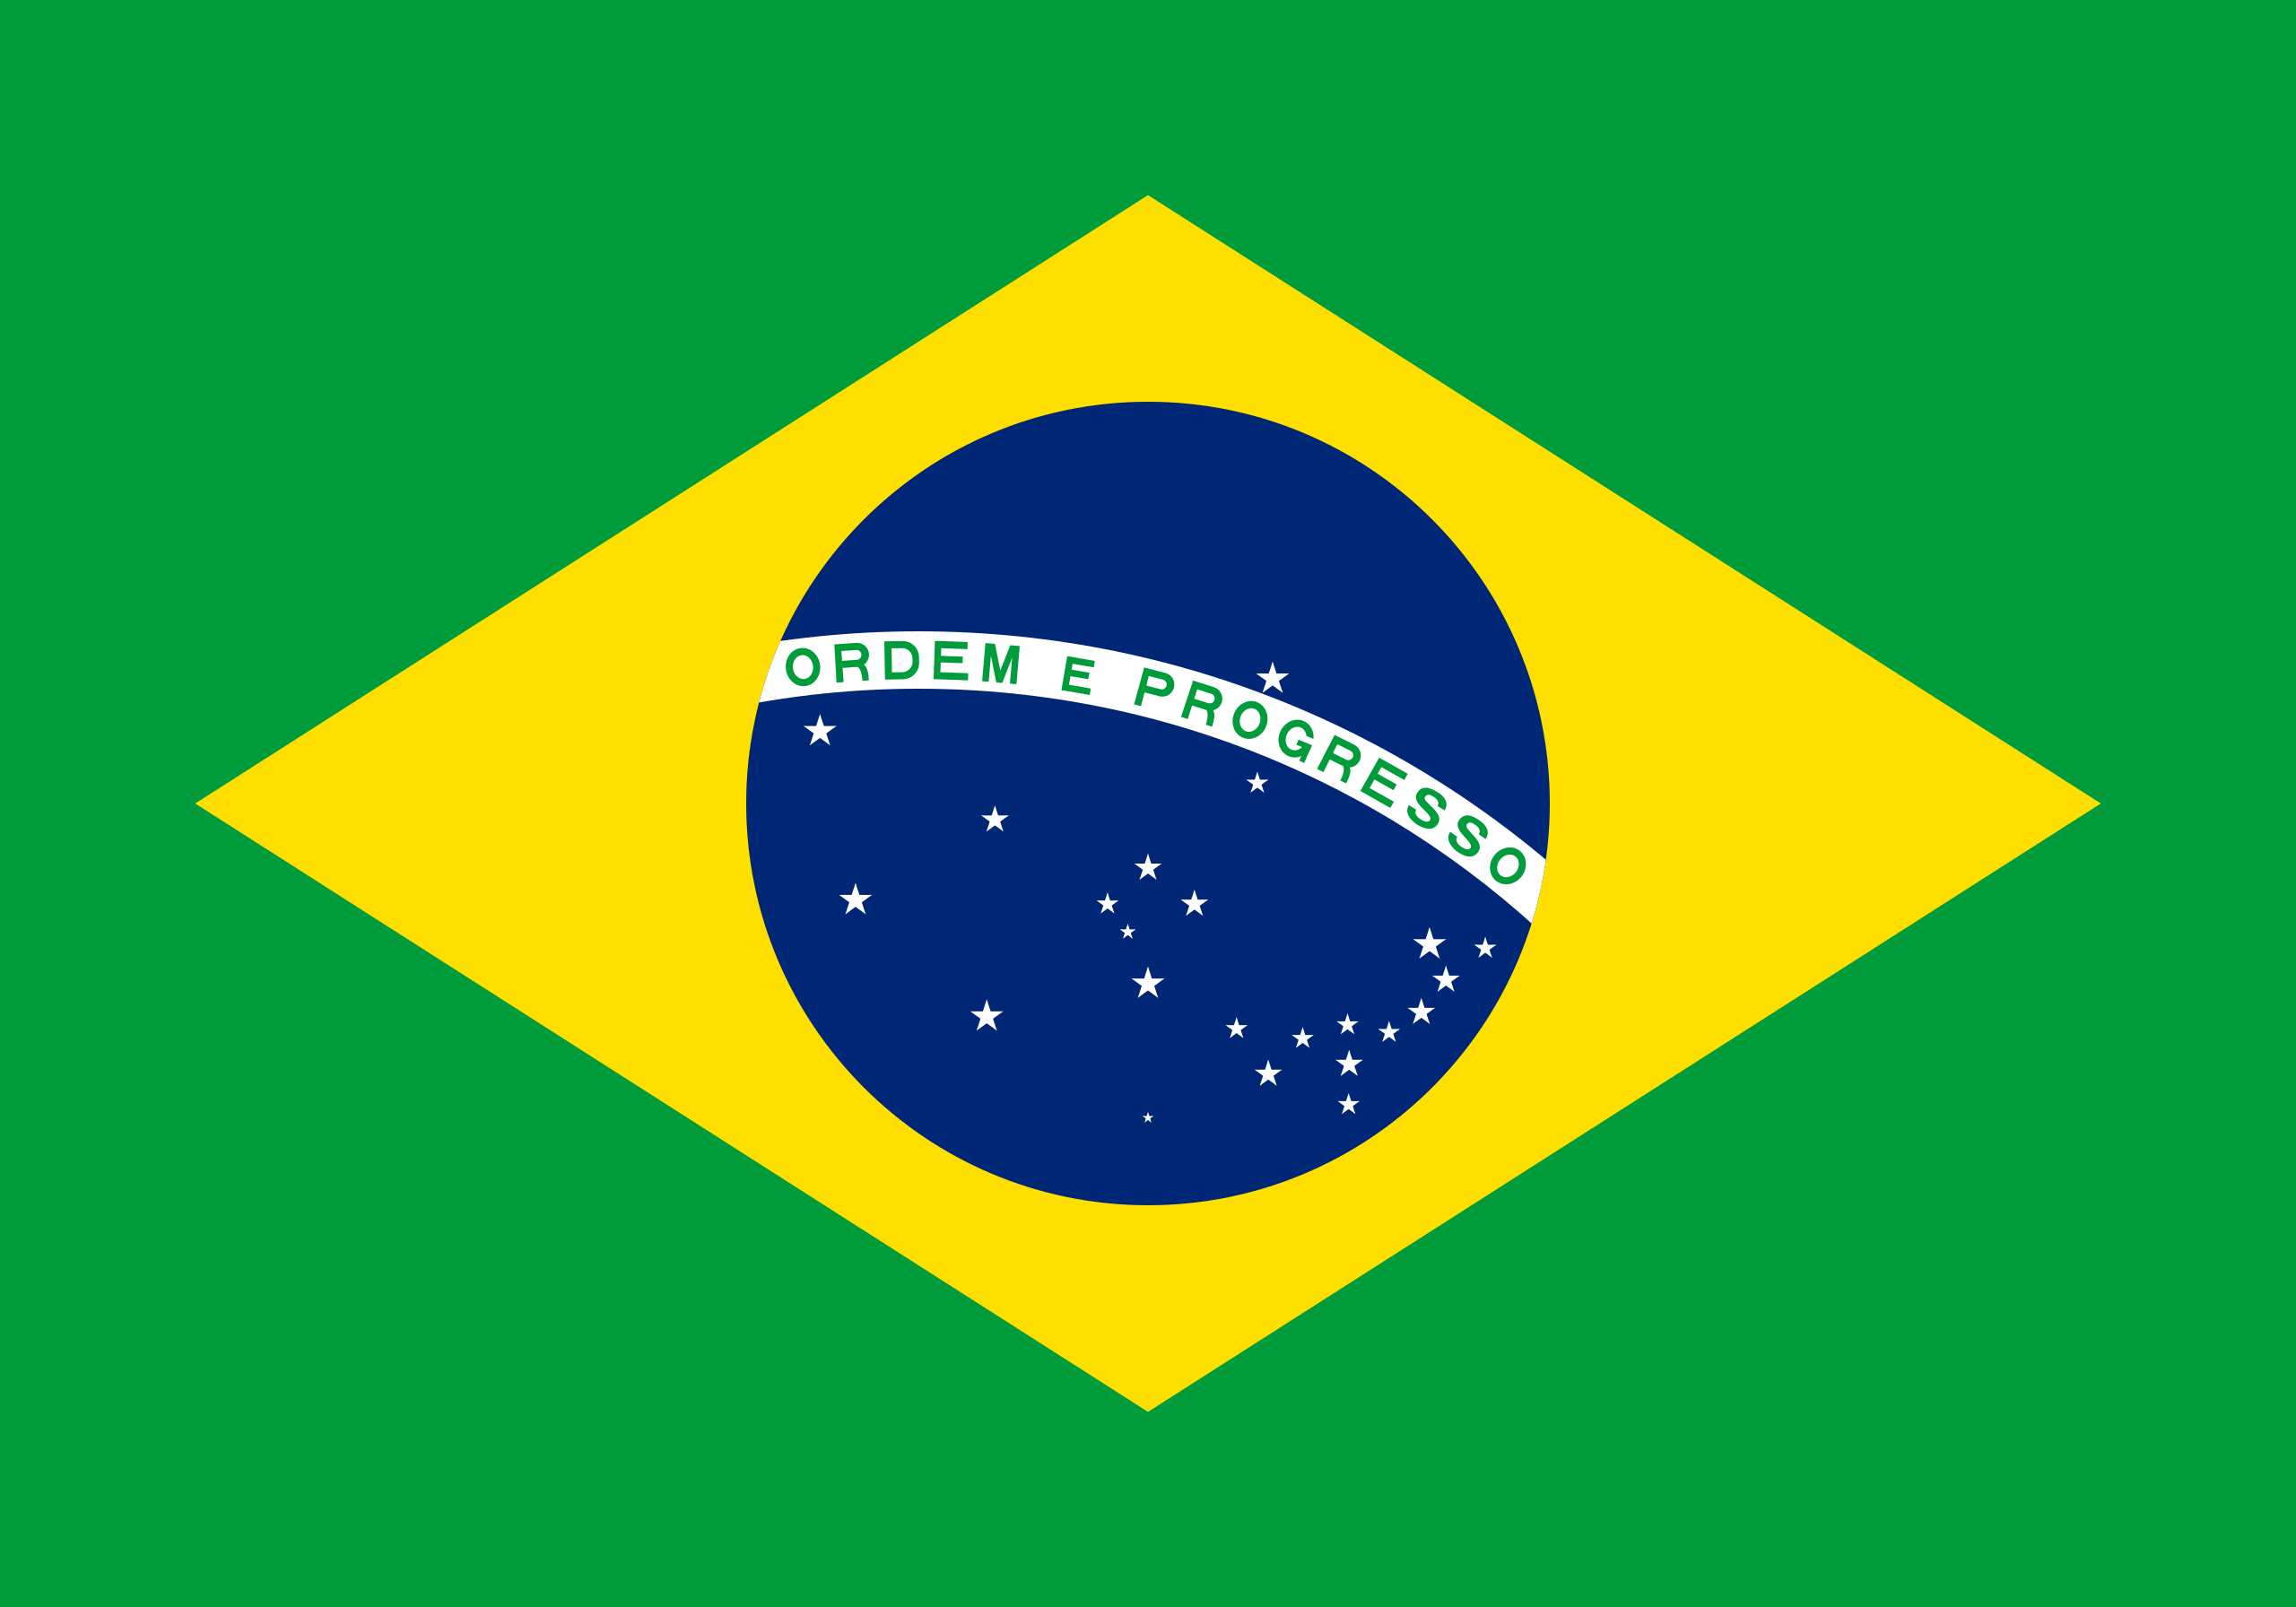 https://upload.wikimedia.org/wikipedia/commons/thumb/2/2e/Flag_of_Brazil_%281968%E2%80%931992%29.svg/2560px-Flag_of_Brazil_%281968%E2%80%931992%29.svg.png